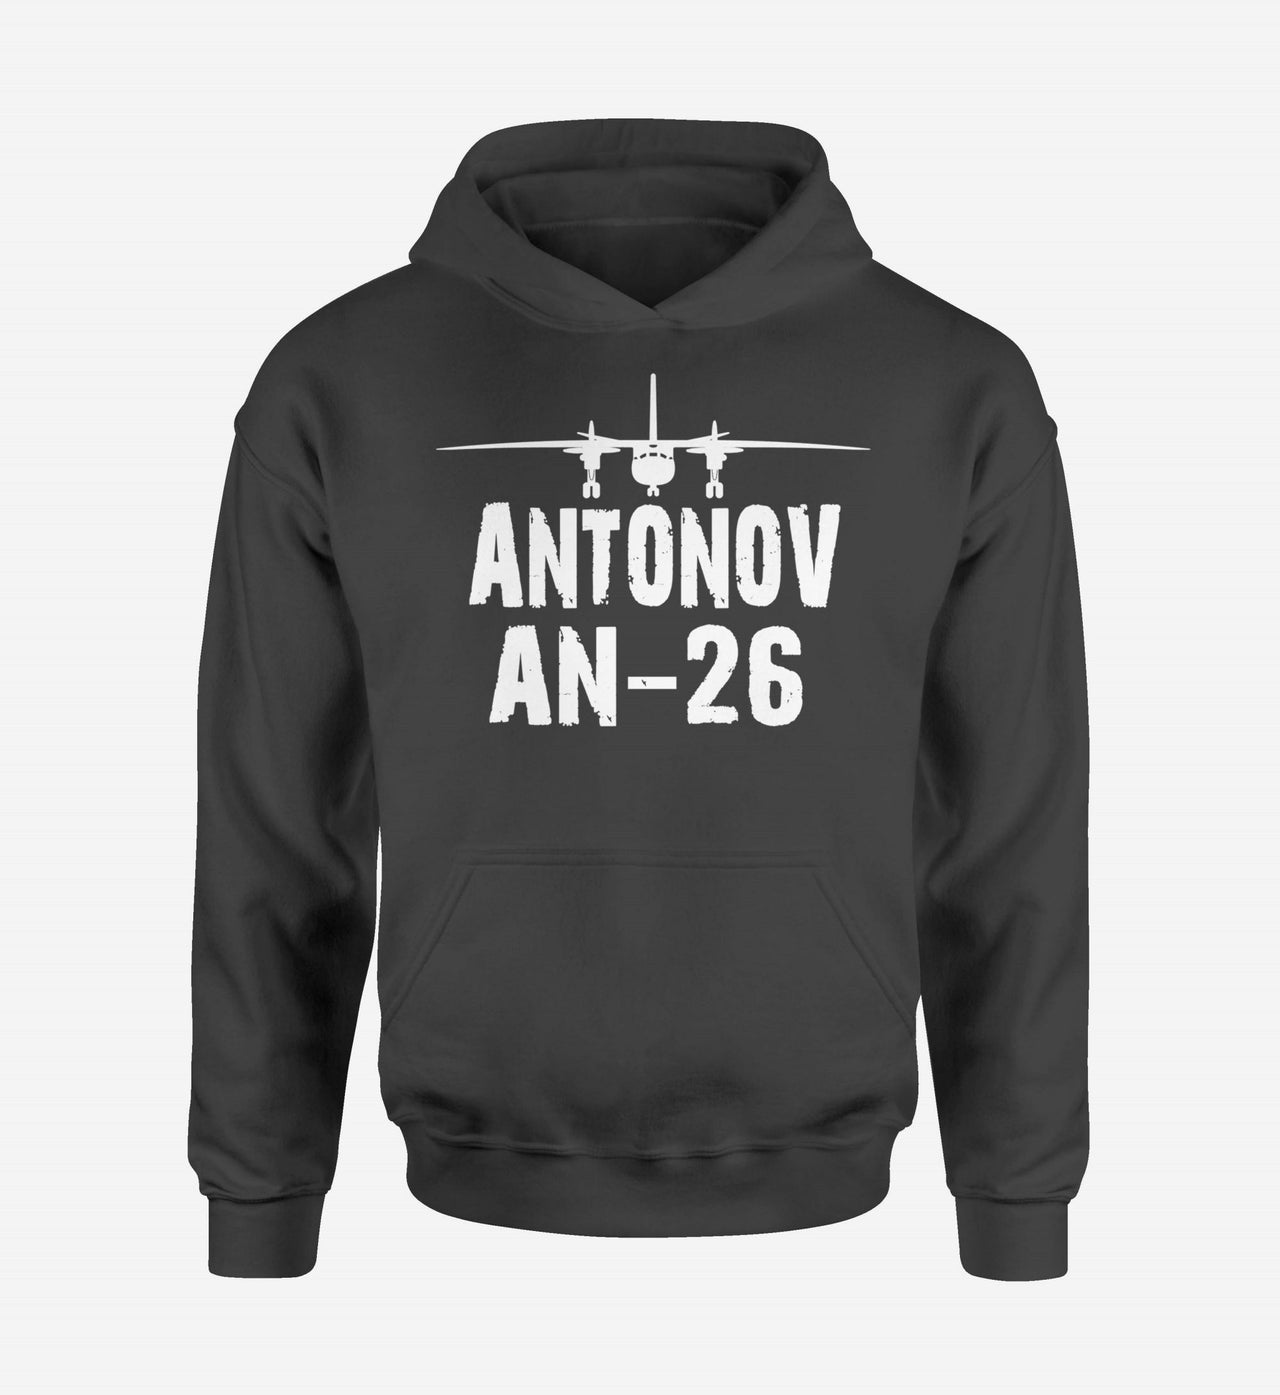 Antonov AN-26 & Plane Designed Hoodies